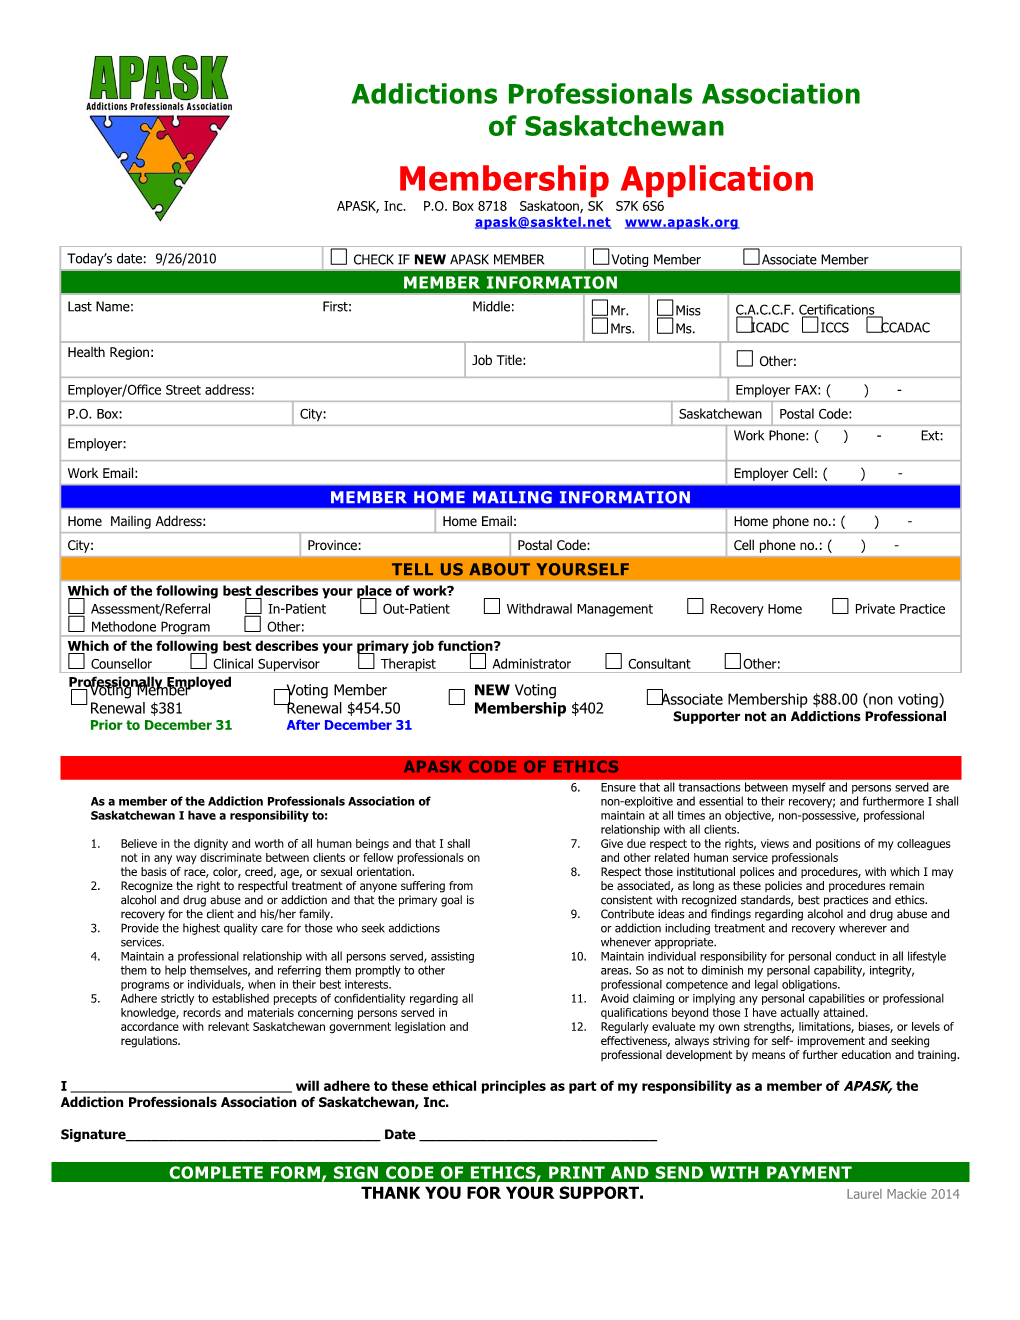 APASK Membership Form with Ethics